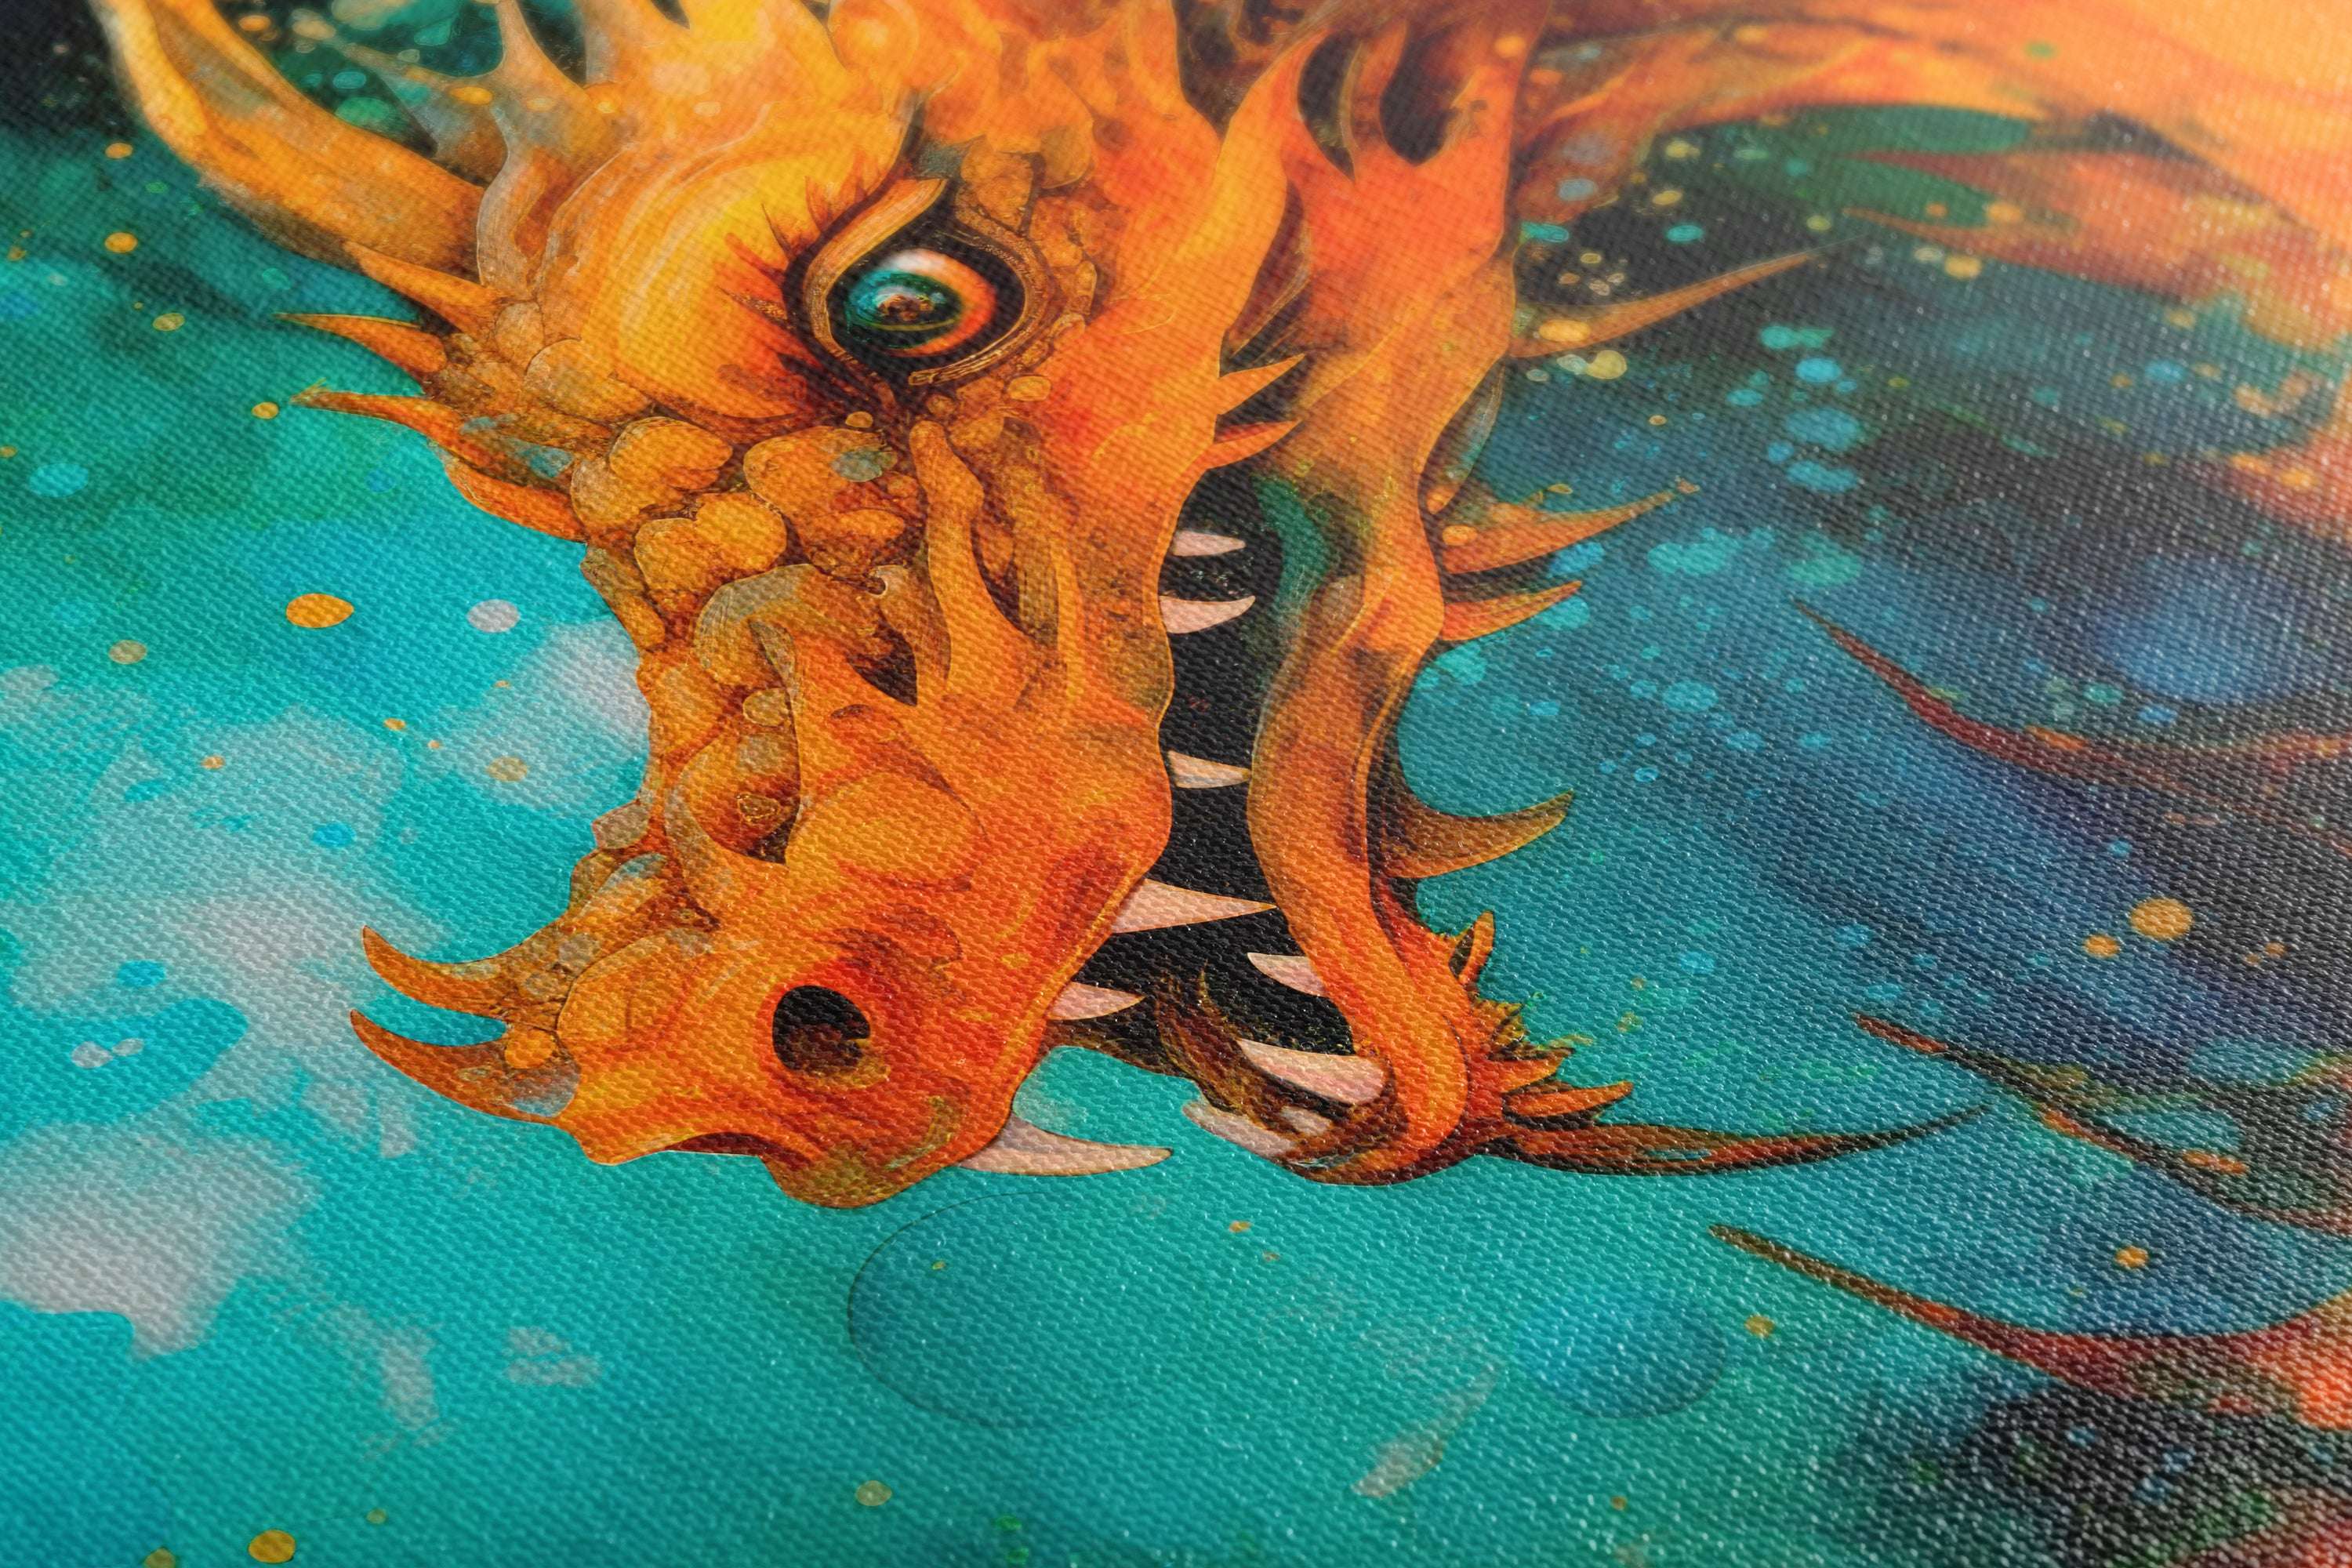 Expressive Ink Art of Mythological Orange Dragon - Canvas Print - Artoholica Ready to Hang Canvas Print